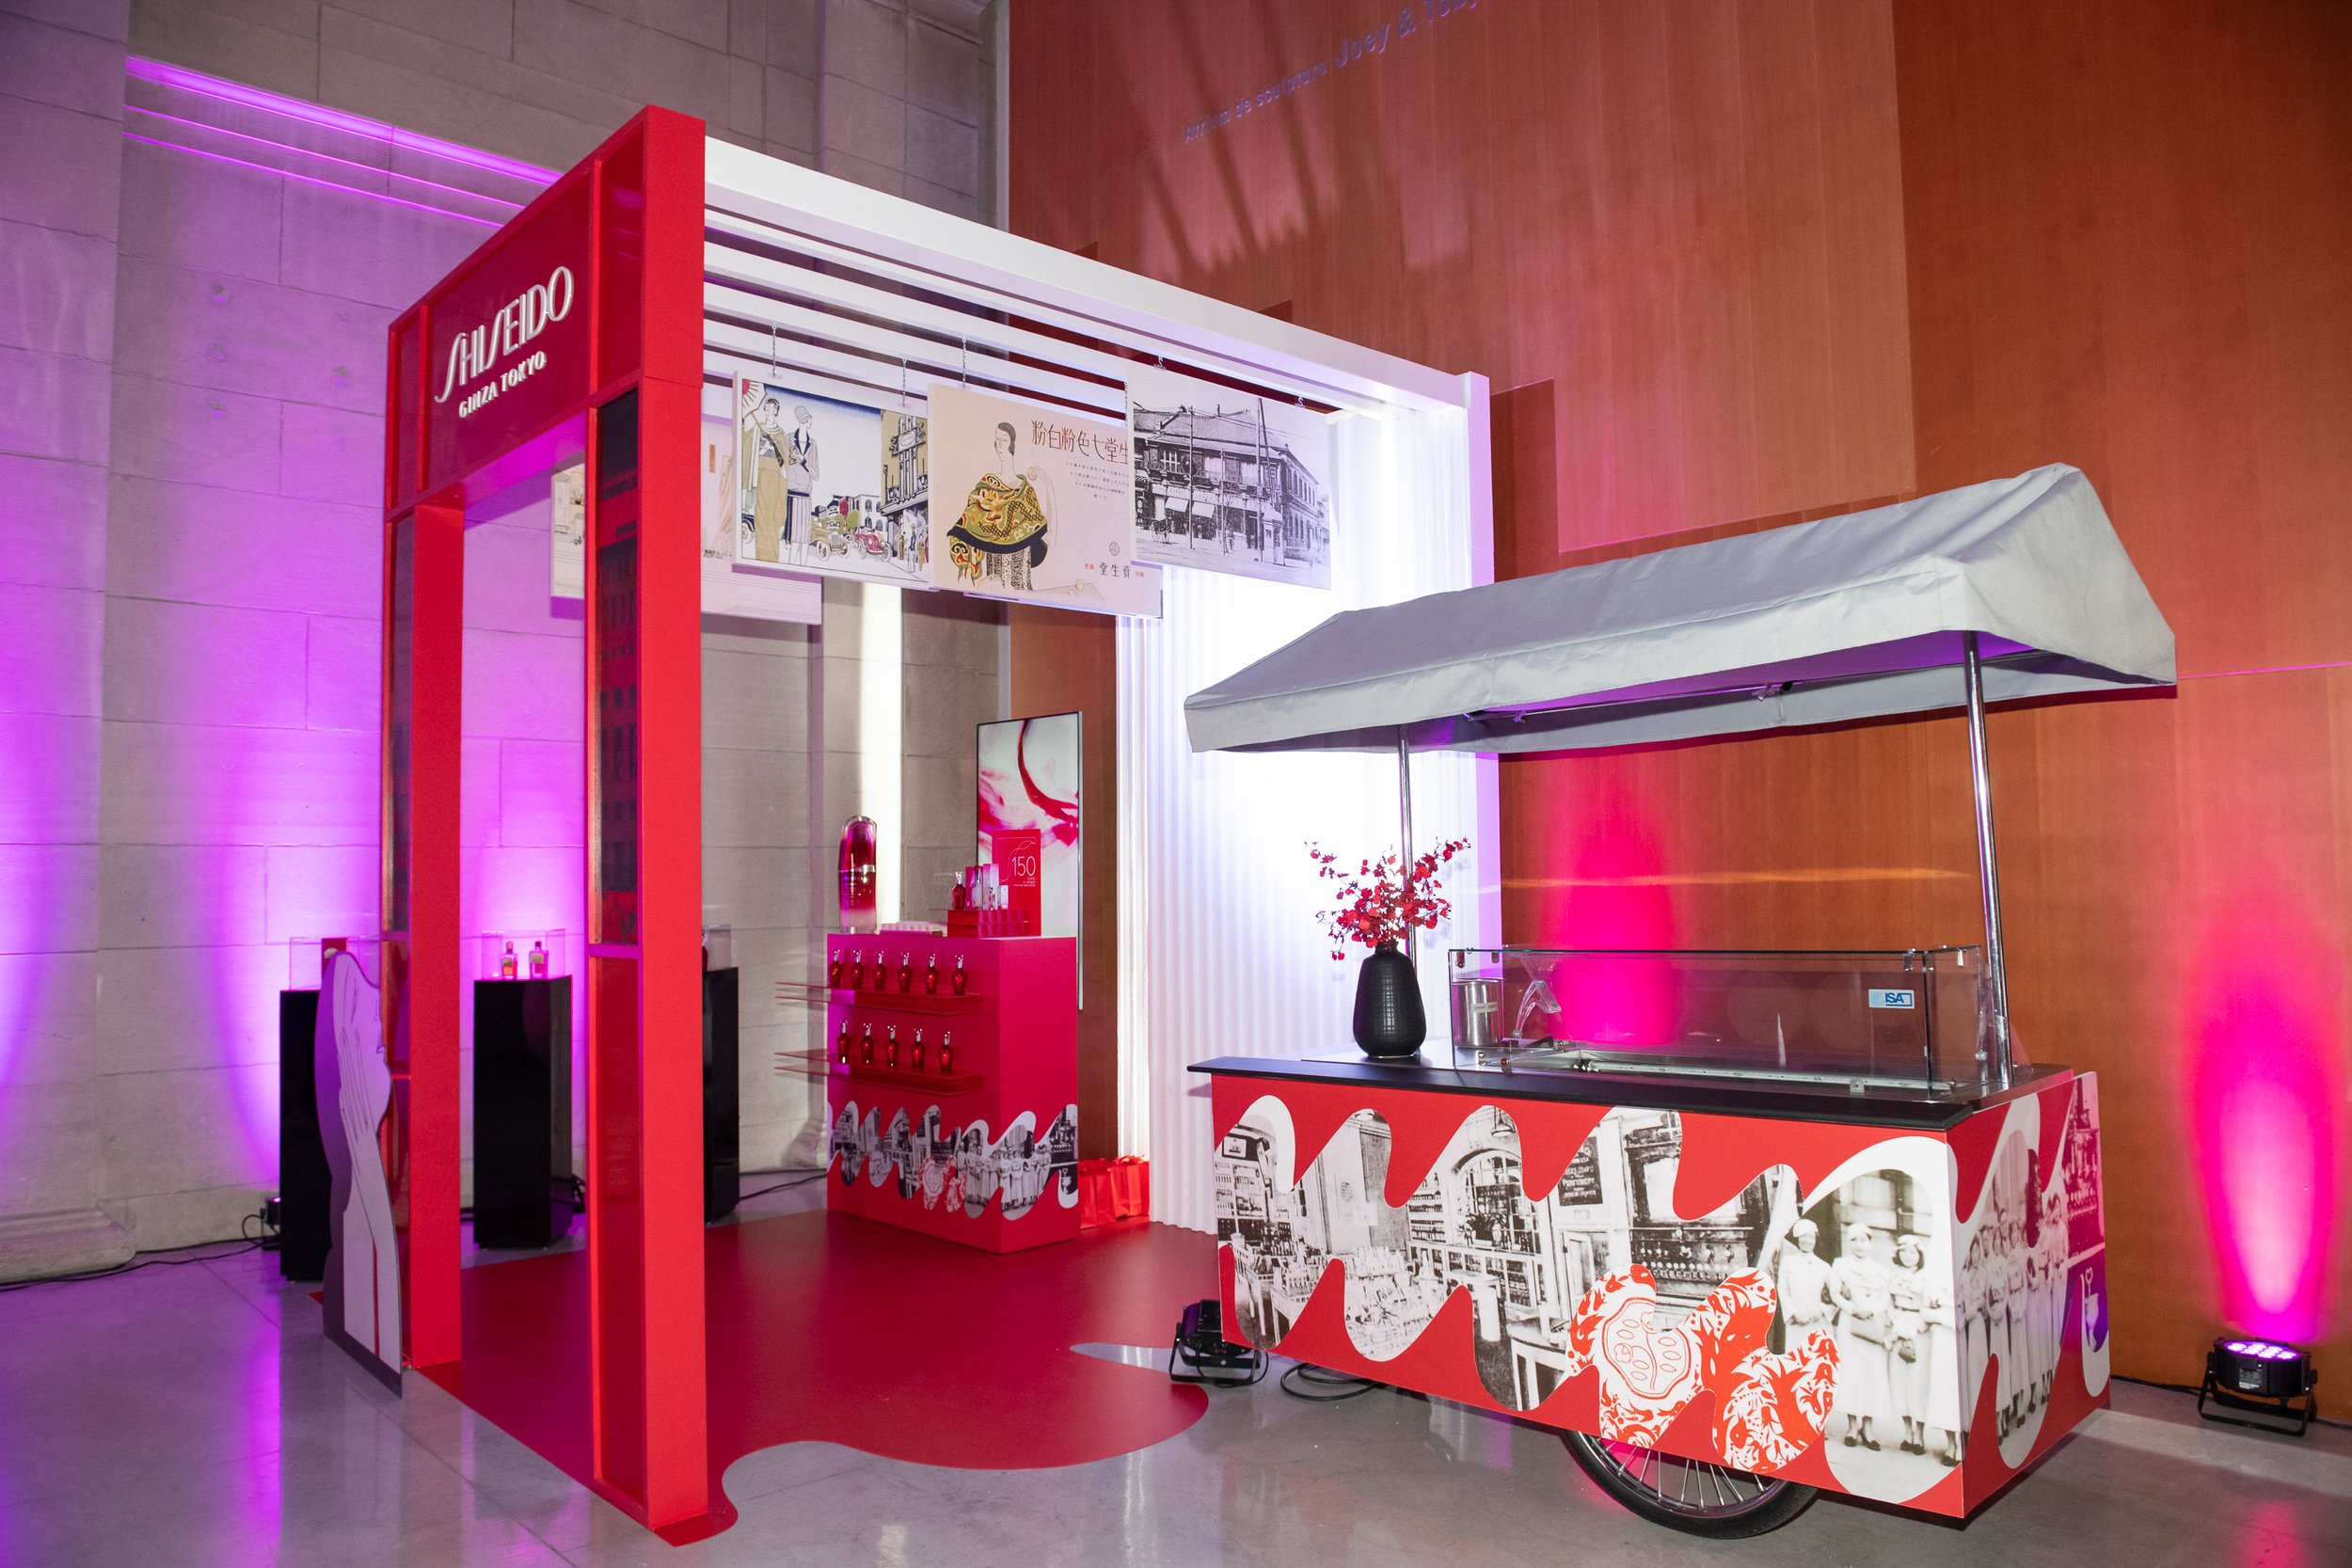 Shiseido-AGO-150th-Anniversary-Installation-Brand-Partnerships-Sponsorships-1-Art-Installation-Toronto.jpg